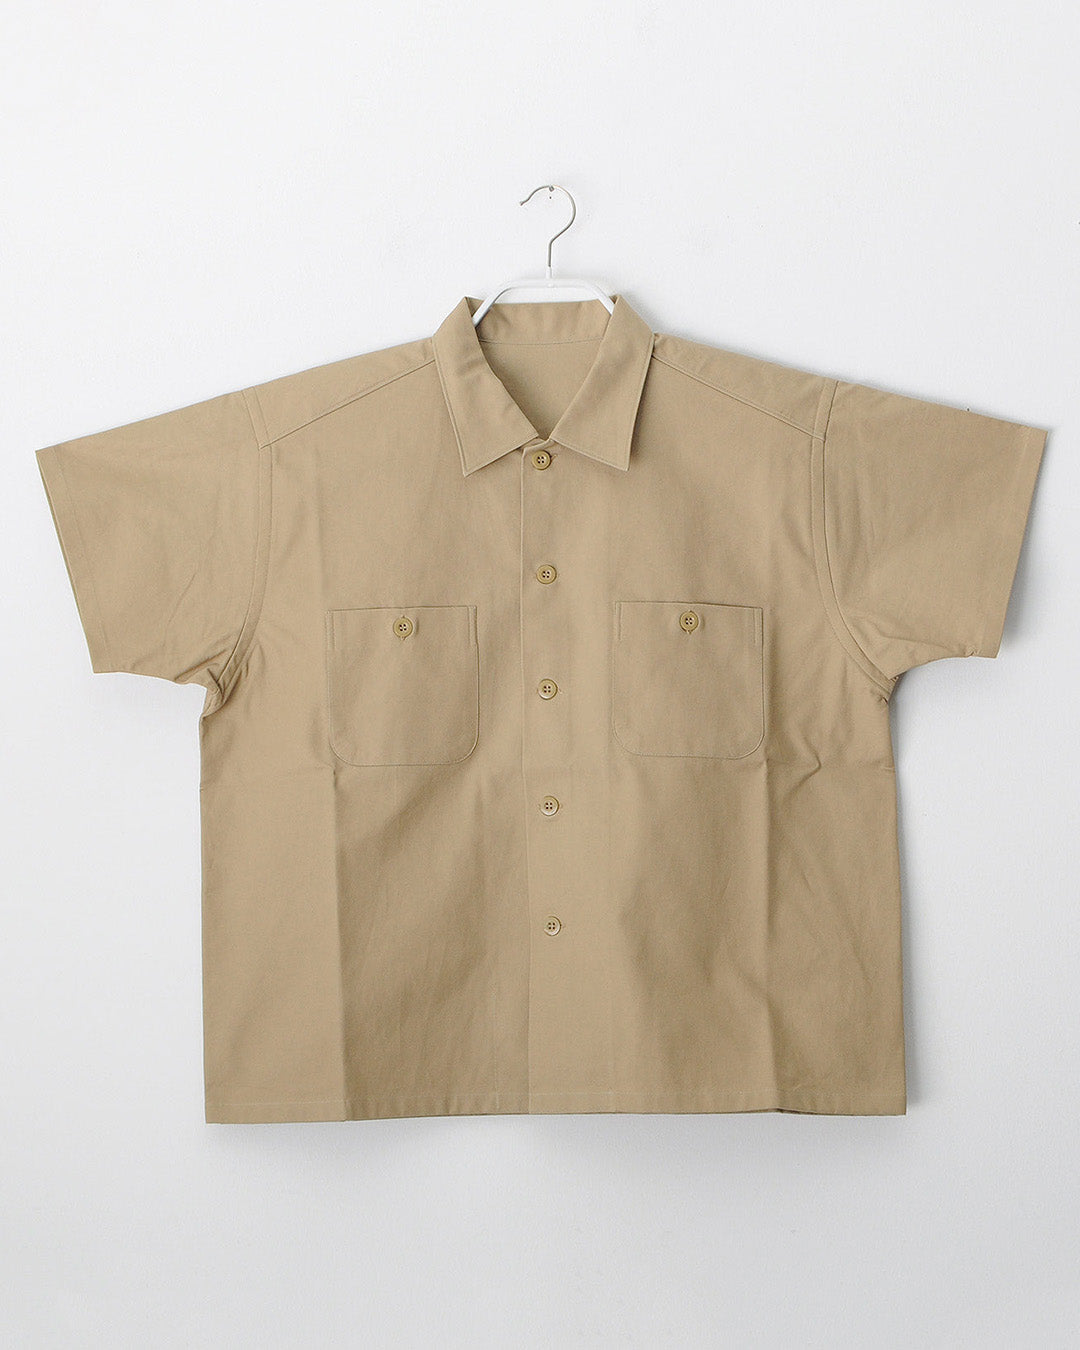 TUKI blouses / gabardine / khaki / size2,4